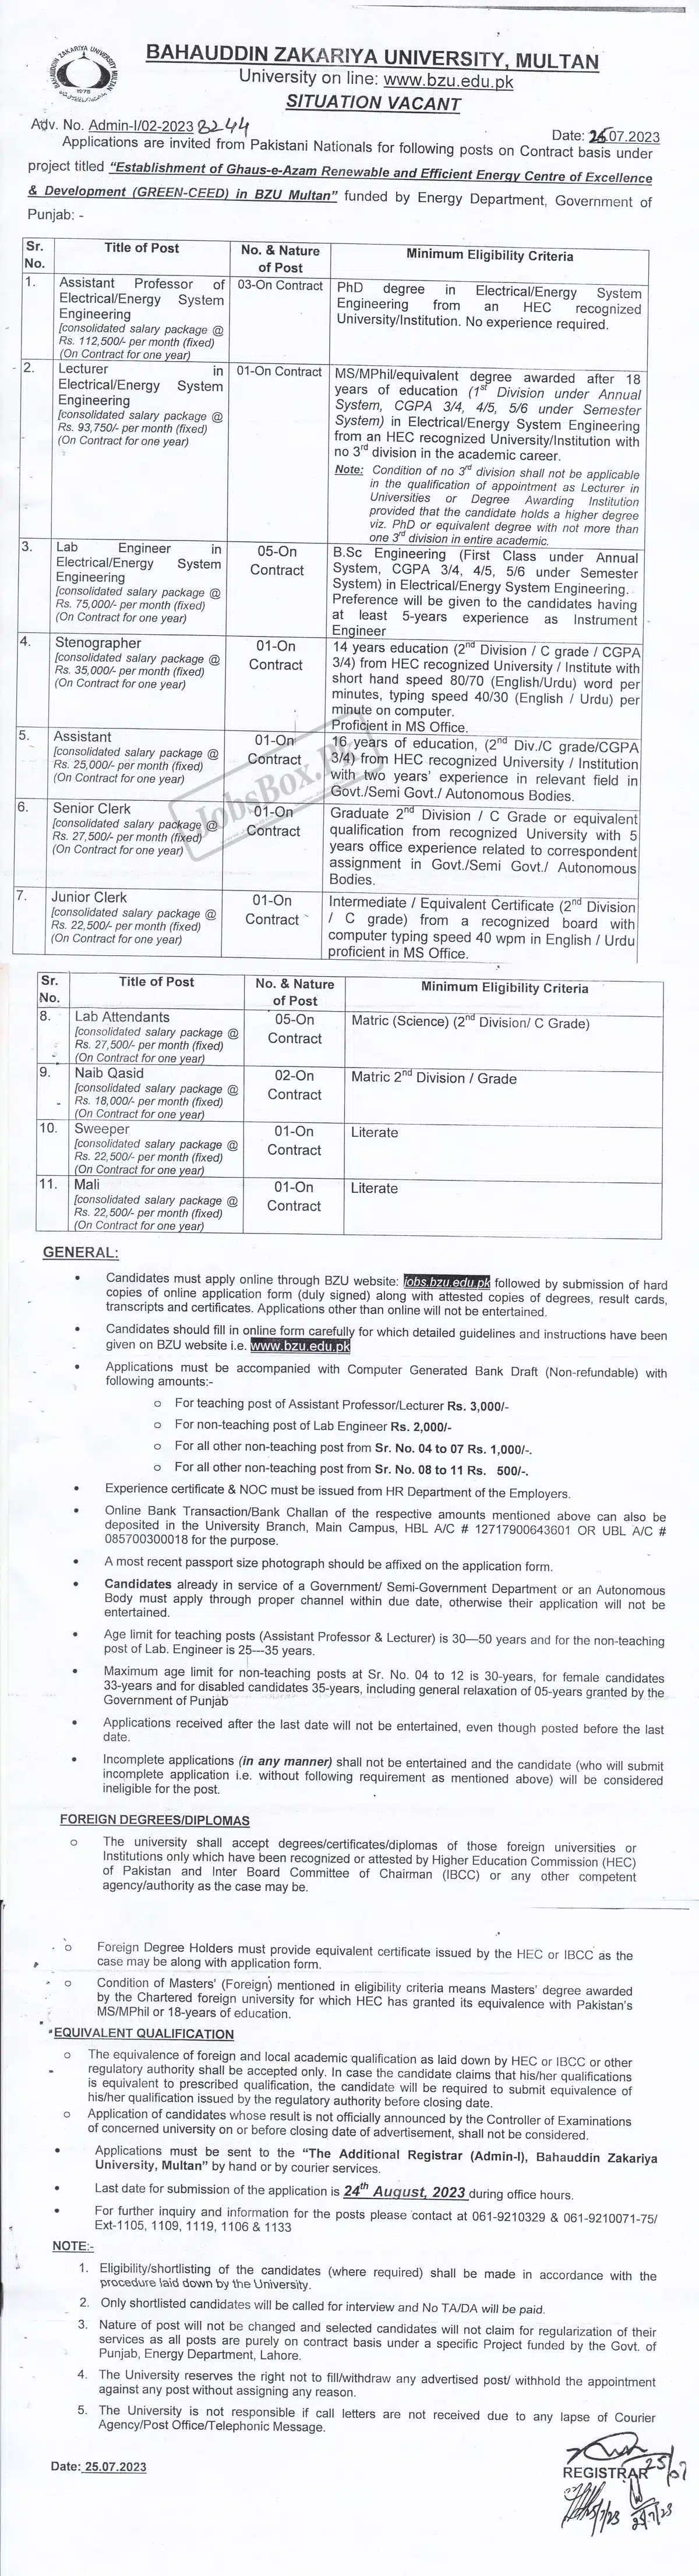 BZU Multan Jobs 2023 - Bahauddin Zakariya University Online Apply